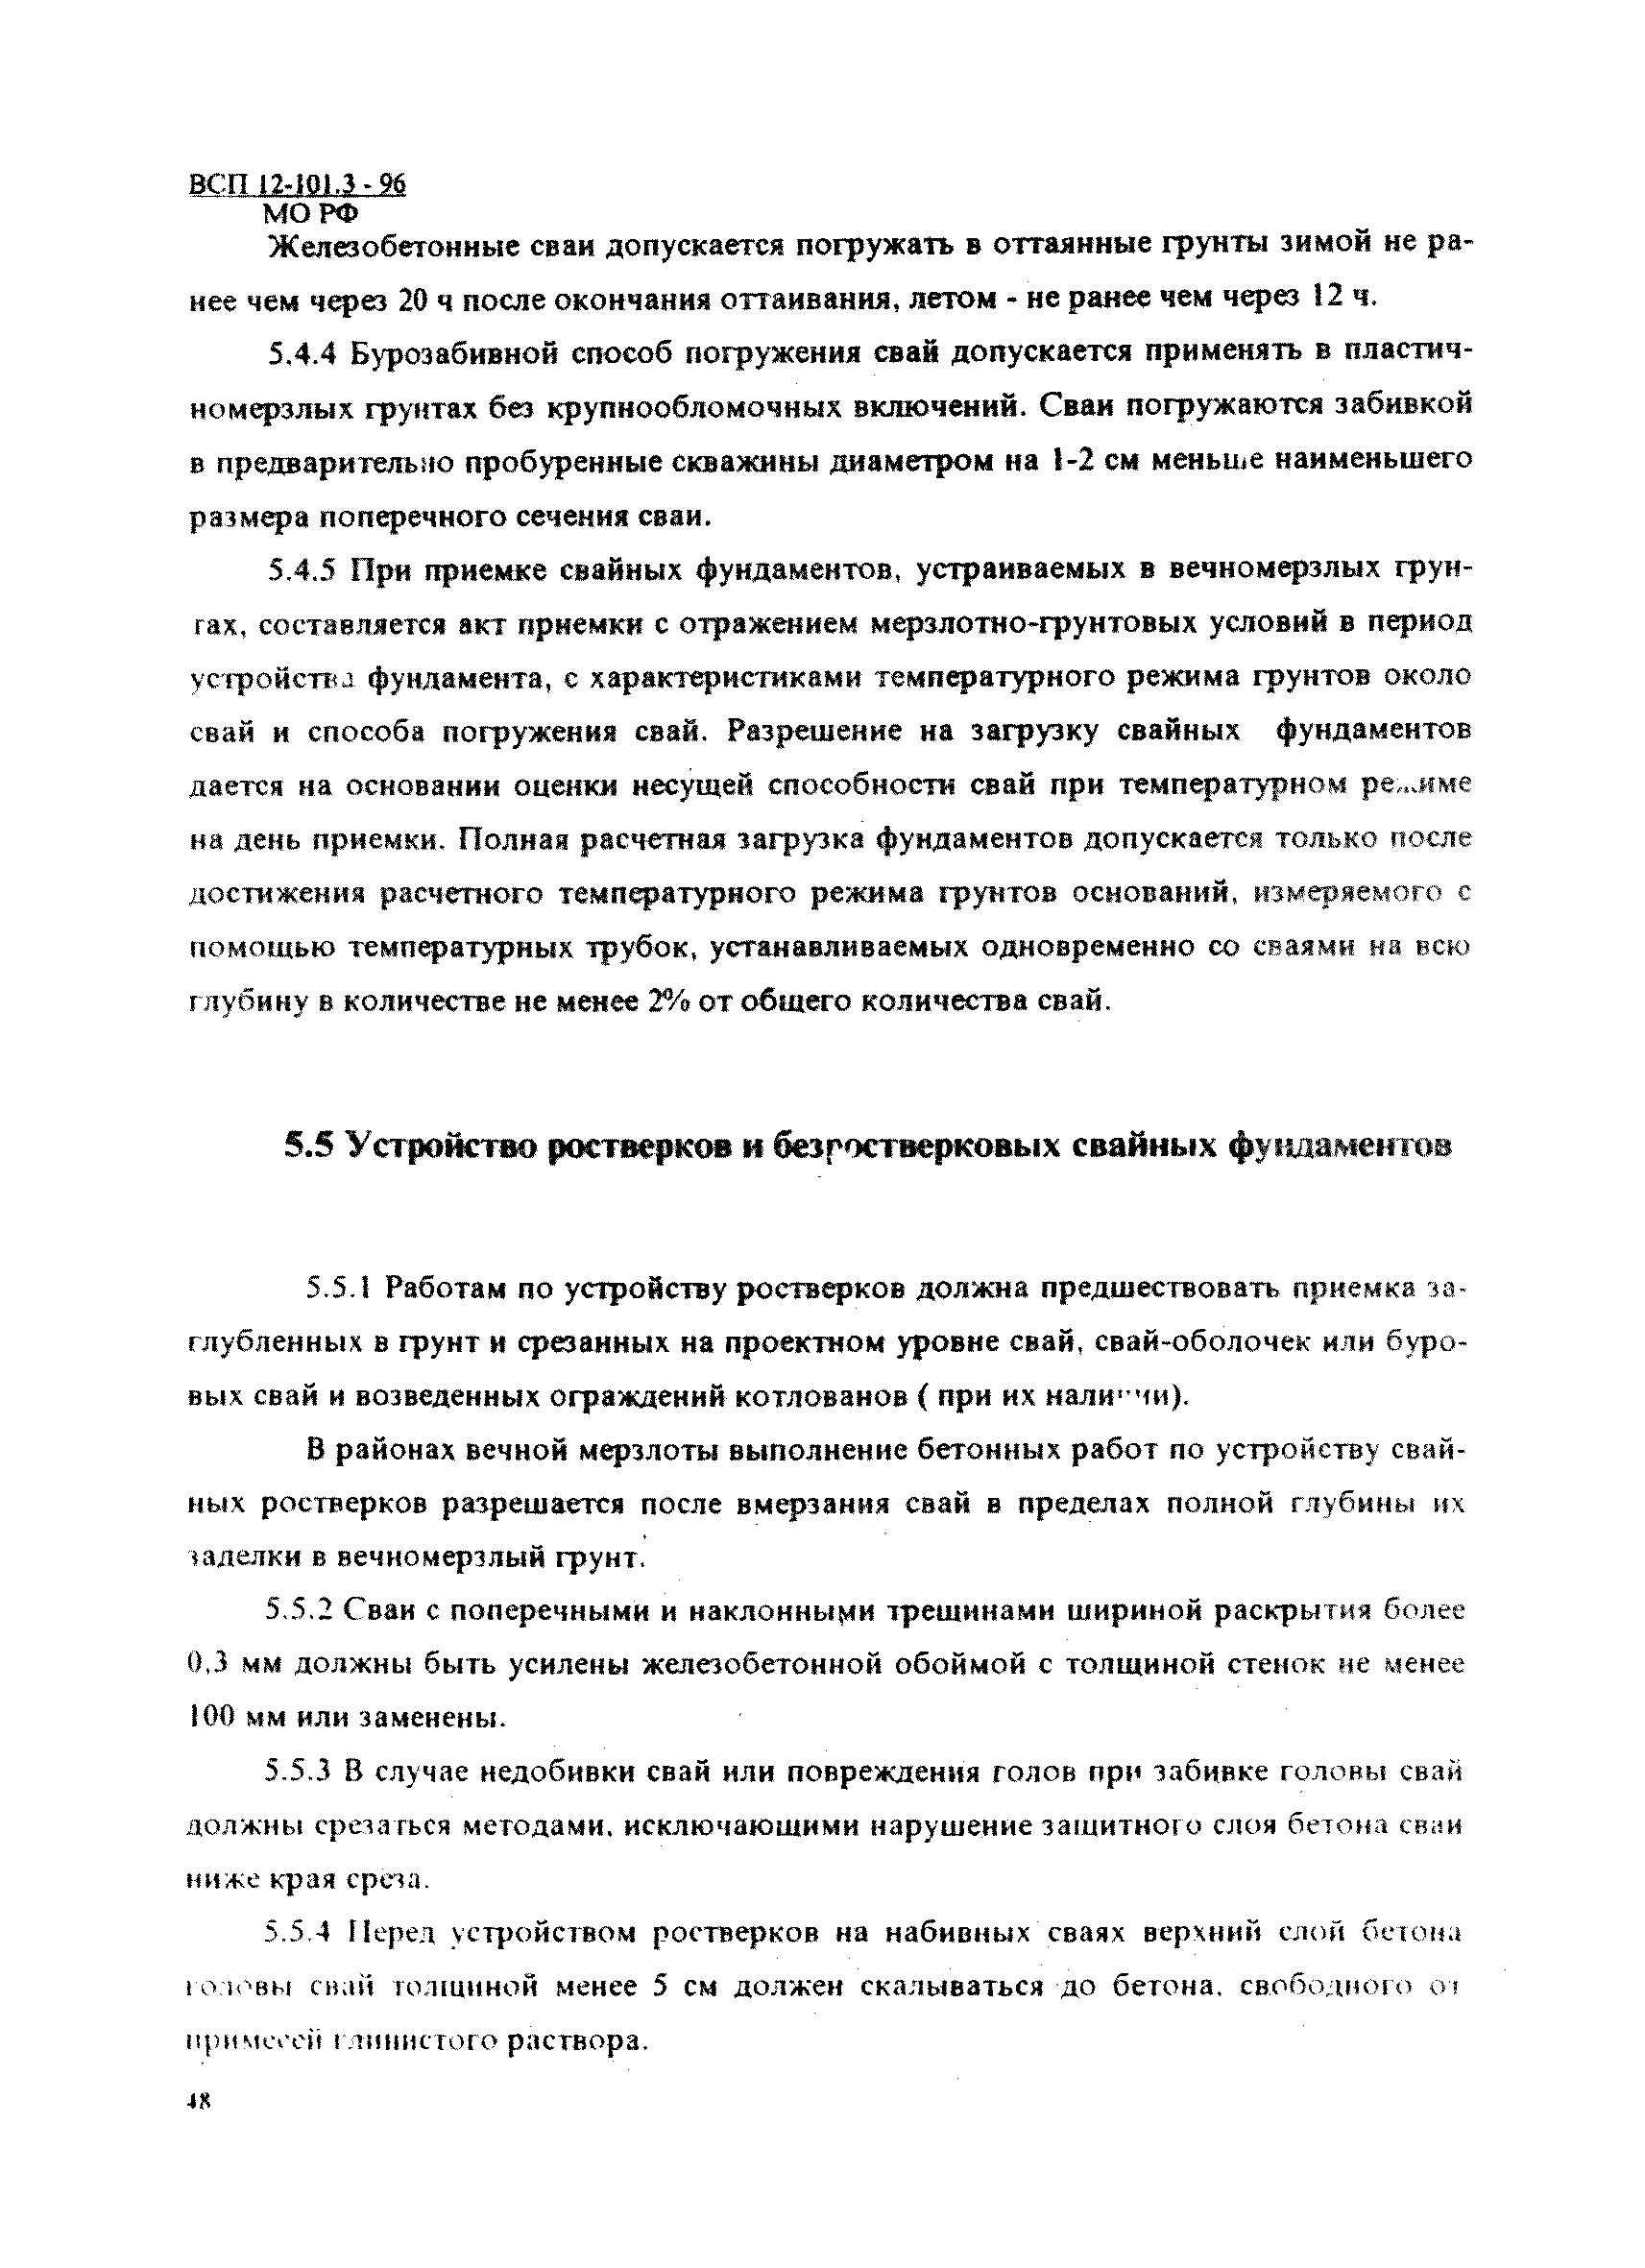 ВСП 12-101.3-96/МО РФ